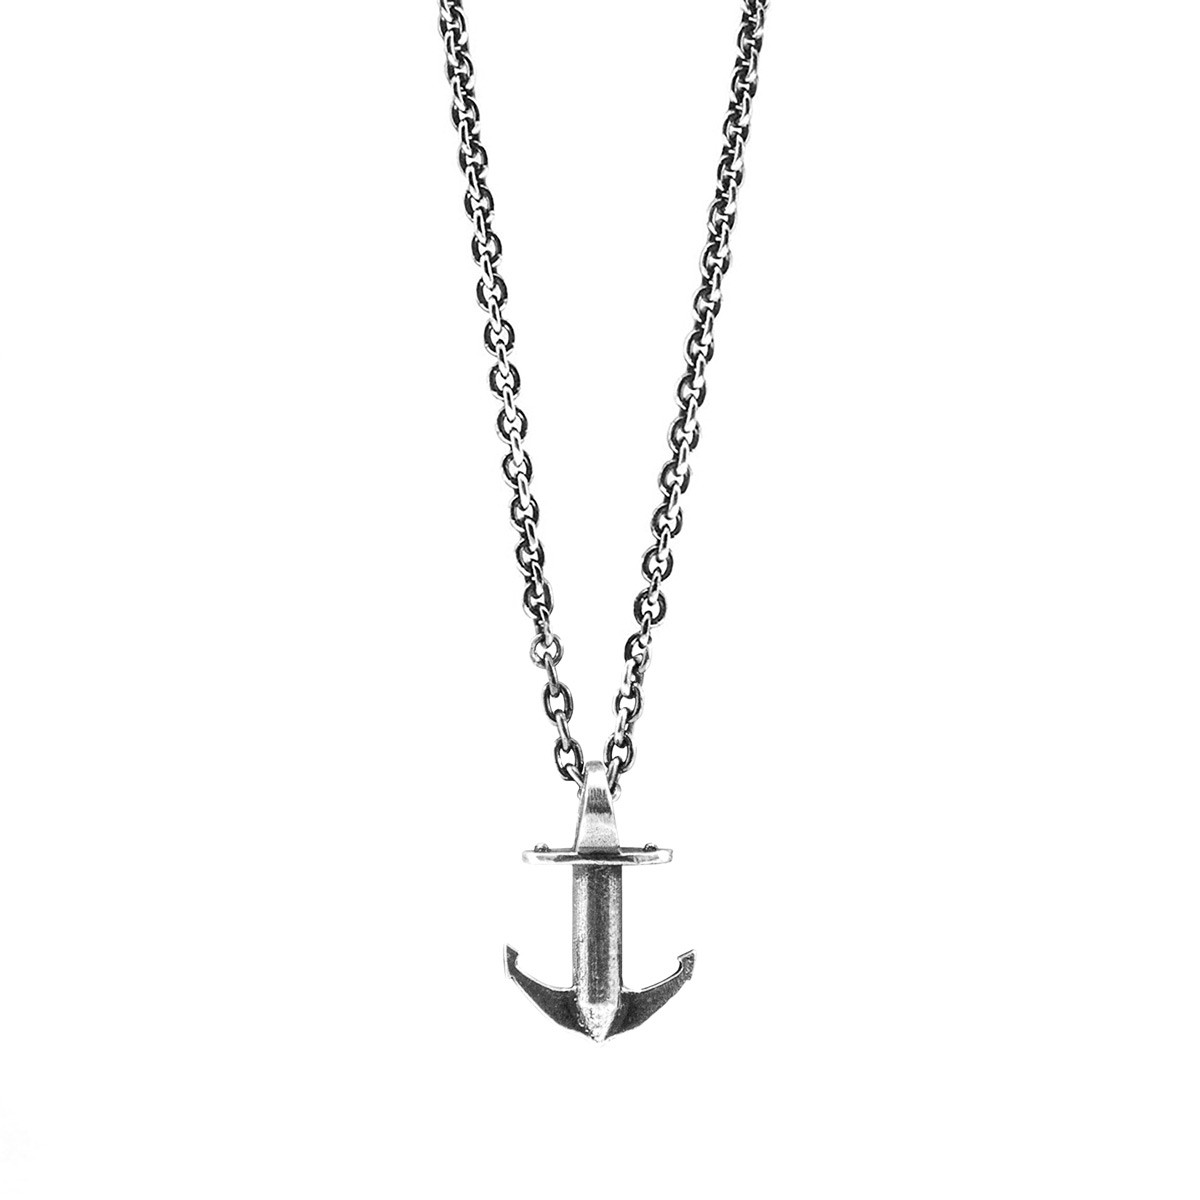 Anchor & Crew Mini Anchor Signature Silver Necklace Pendant